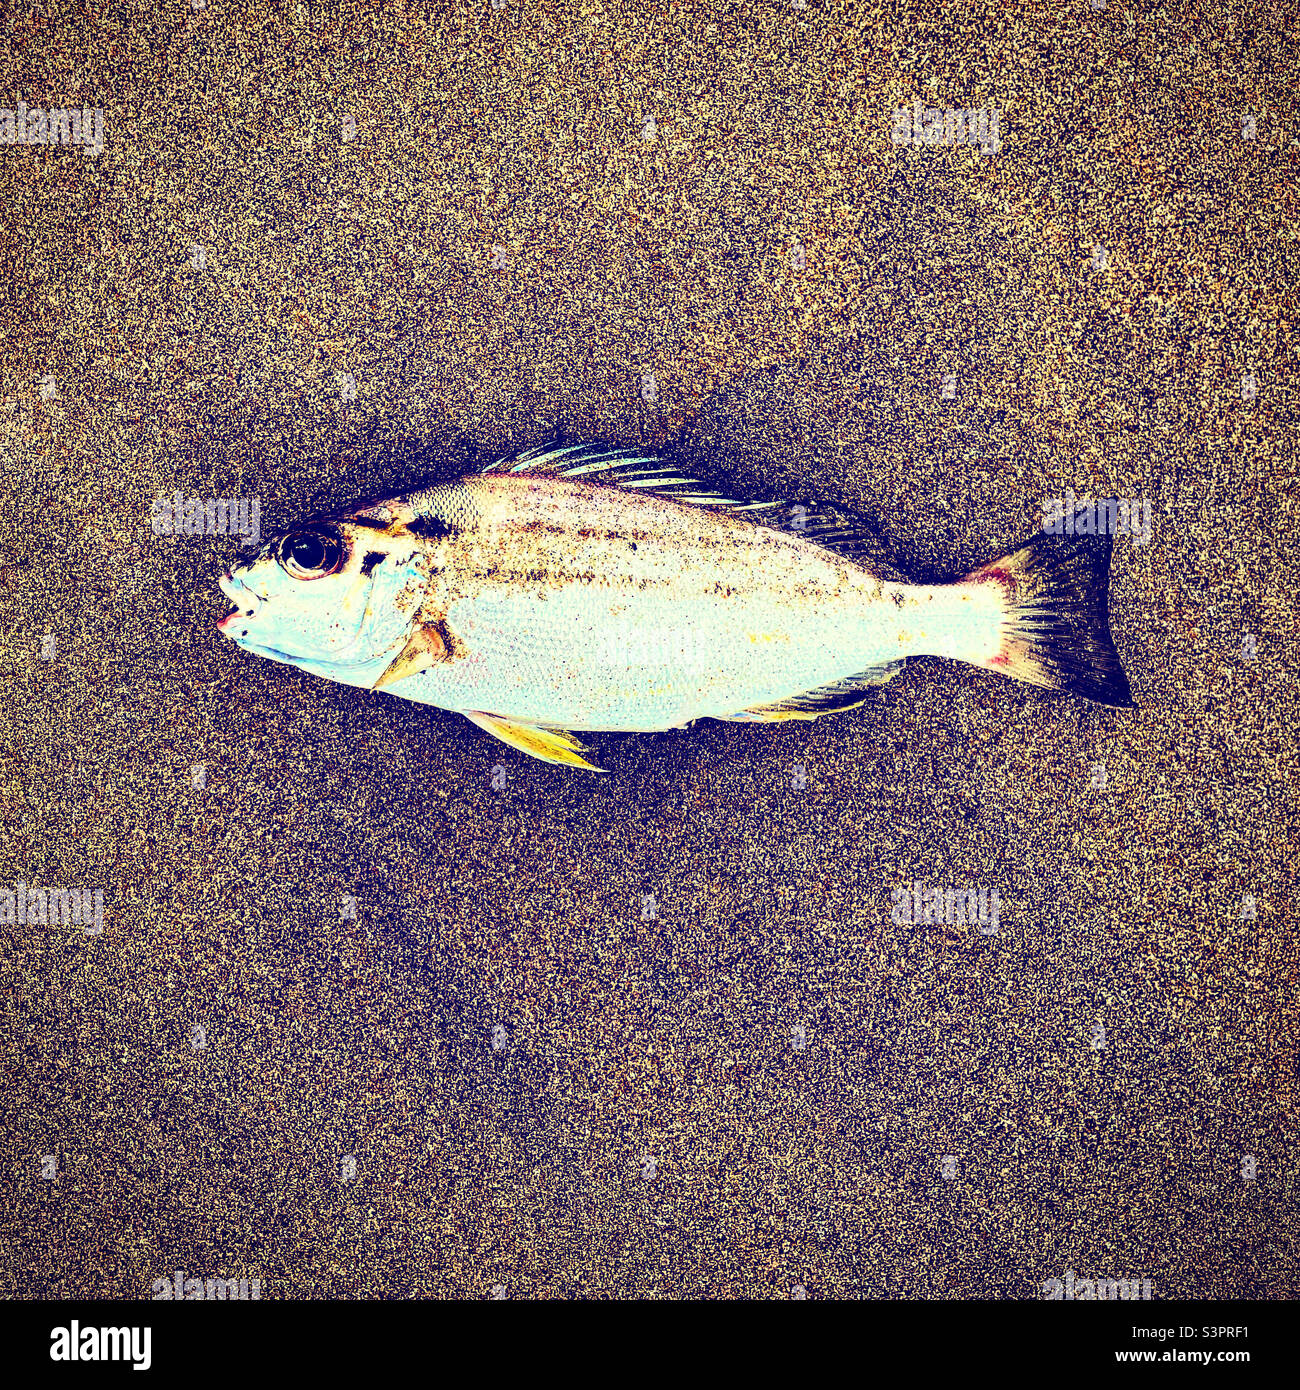 Dead fish on the beach Stock Photo